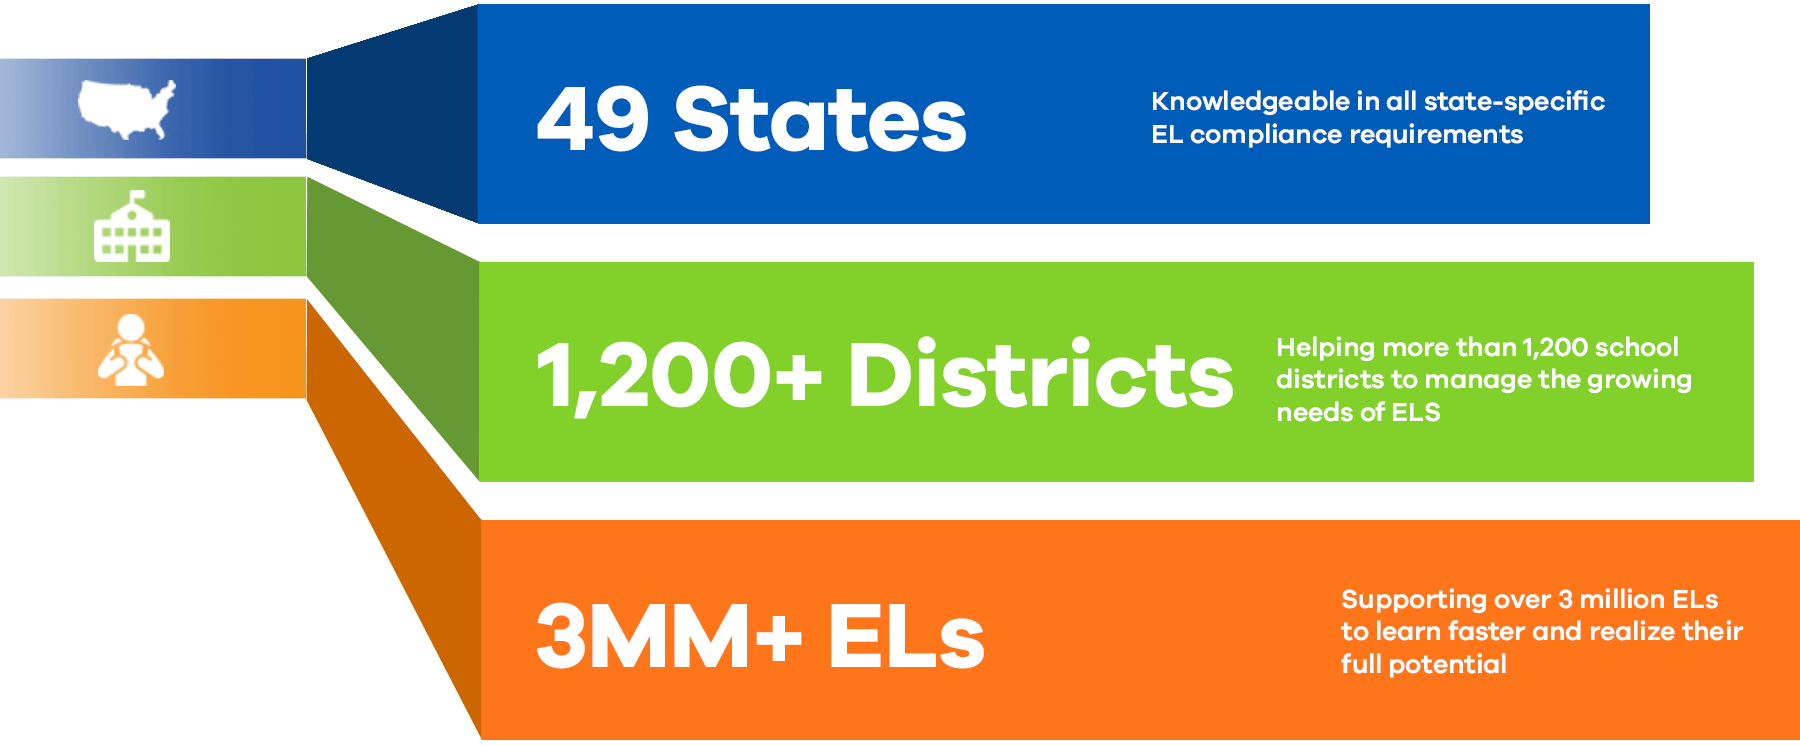 49 states 1,200 districts 2+ mm ELLs